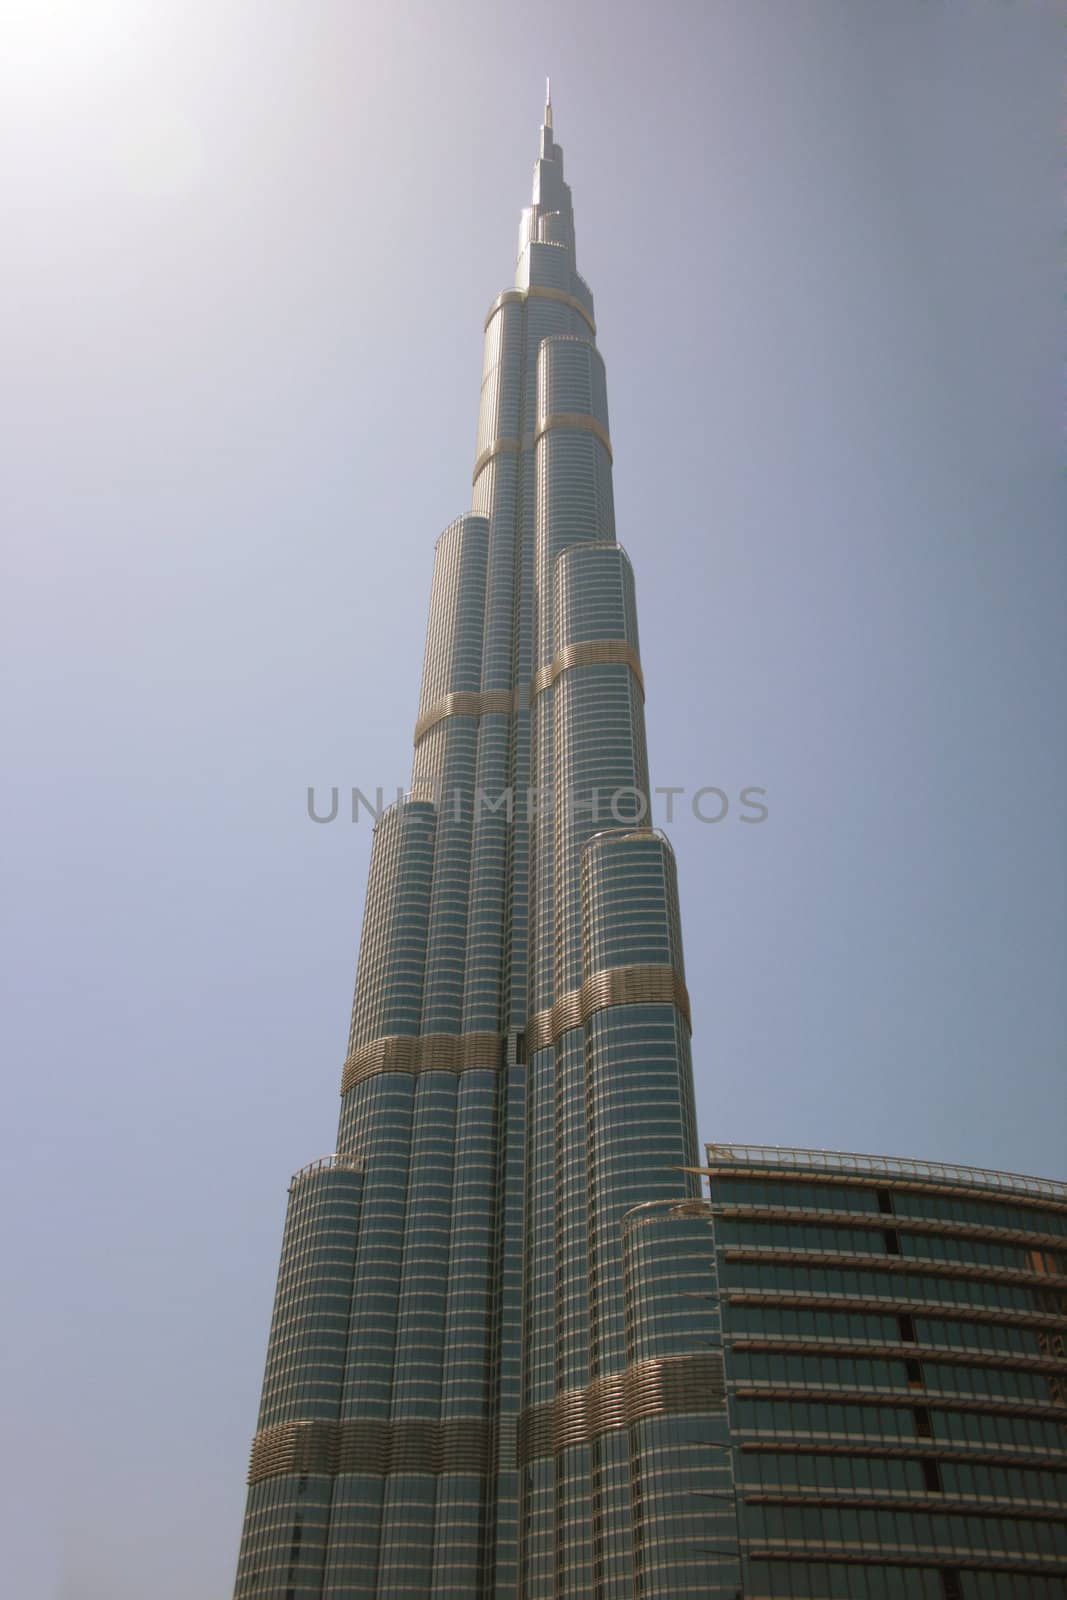 Dubai, United Arab Emirates by jovannig